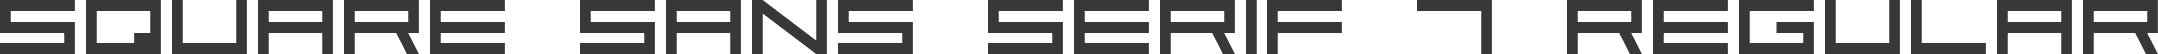 Square Sans Serif 7 Regular